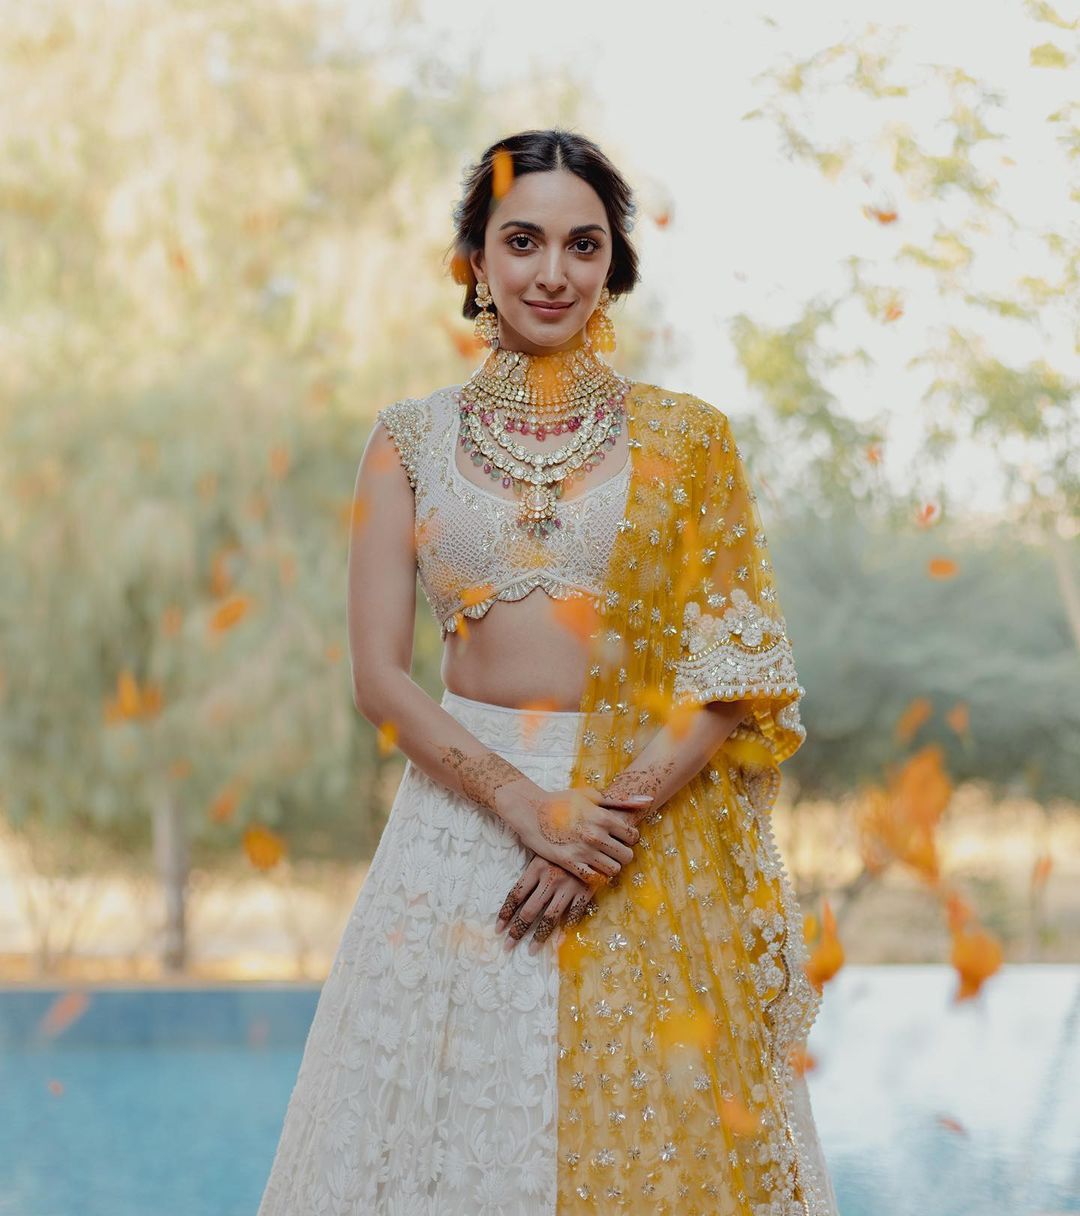 Kiara Advani wears heavy polki jewellery for her Mehendi look